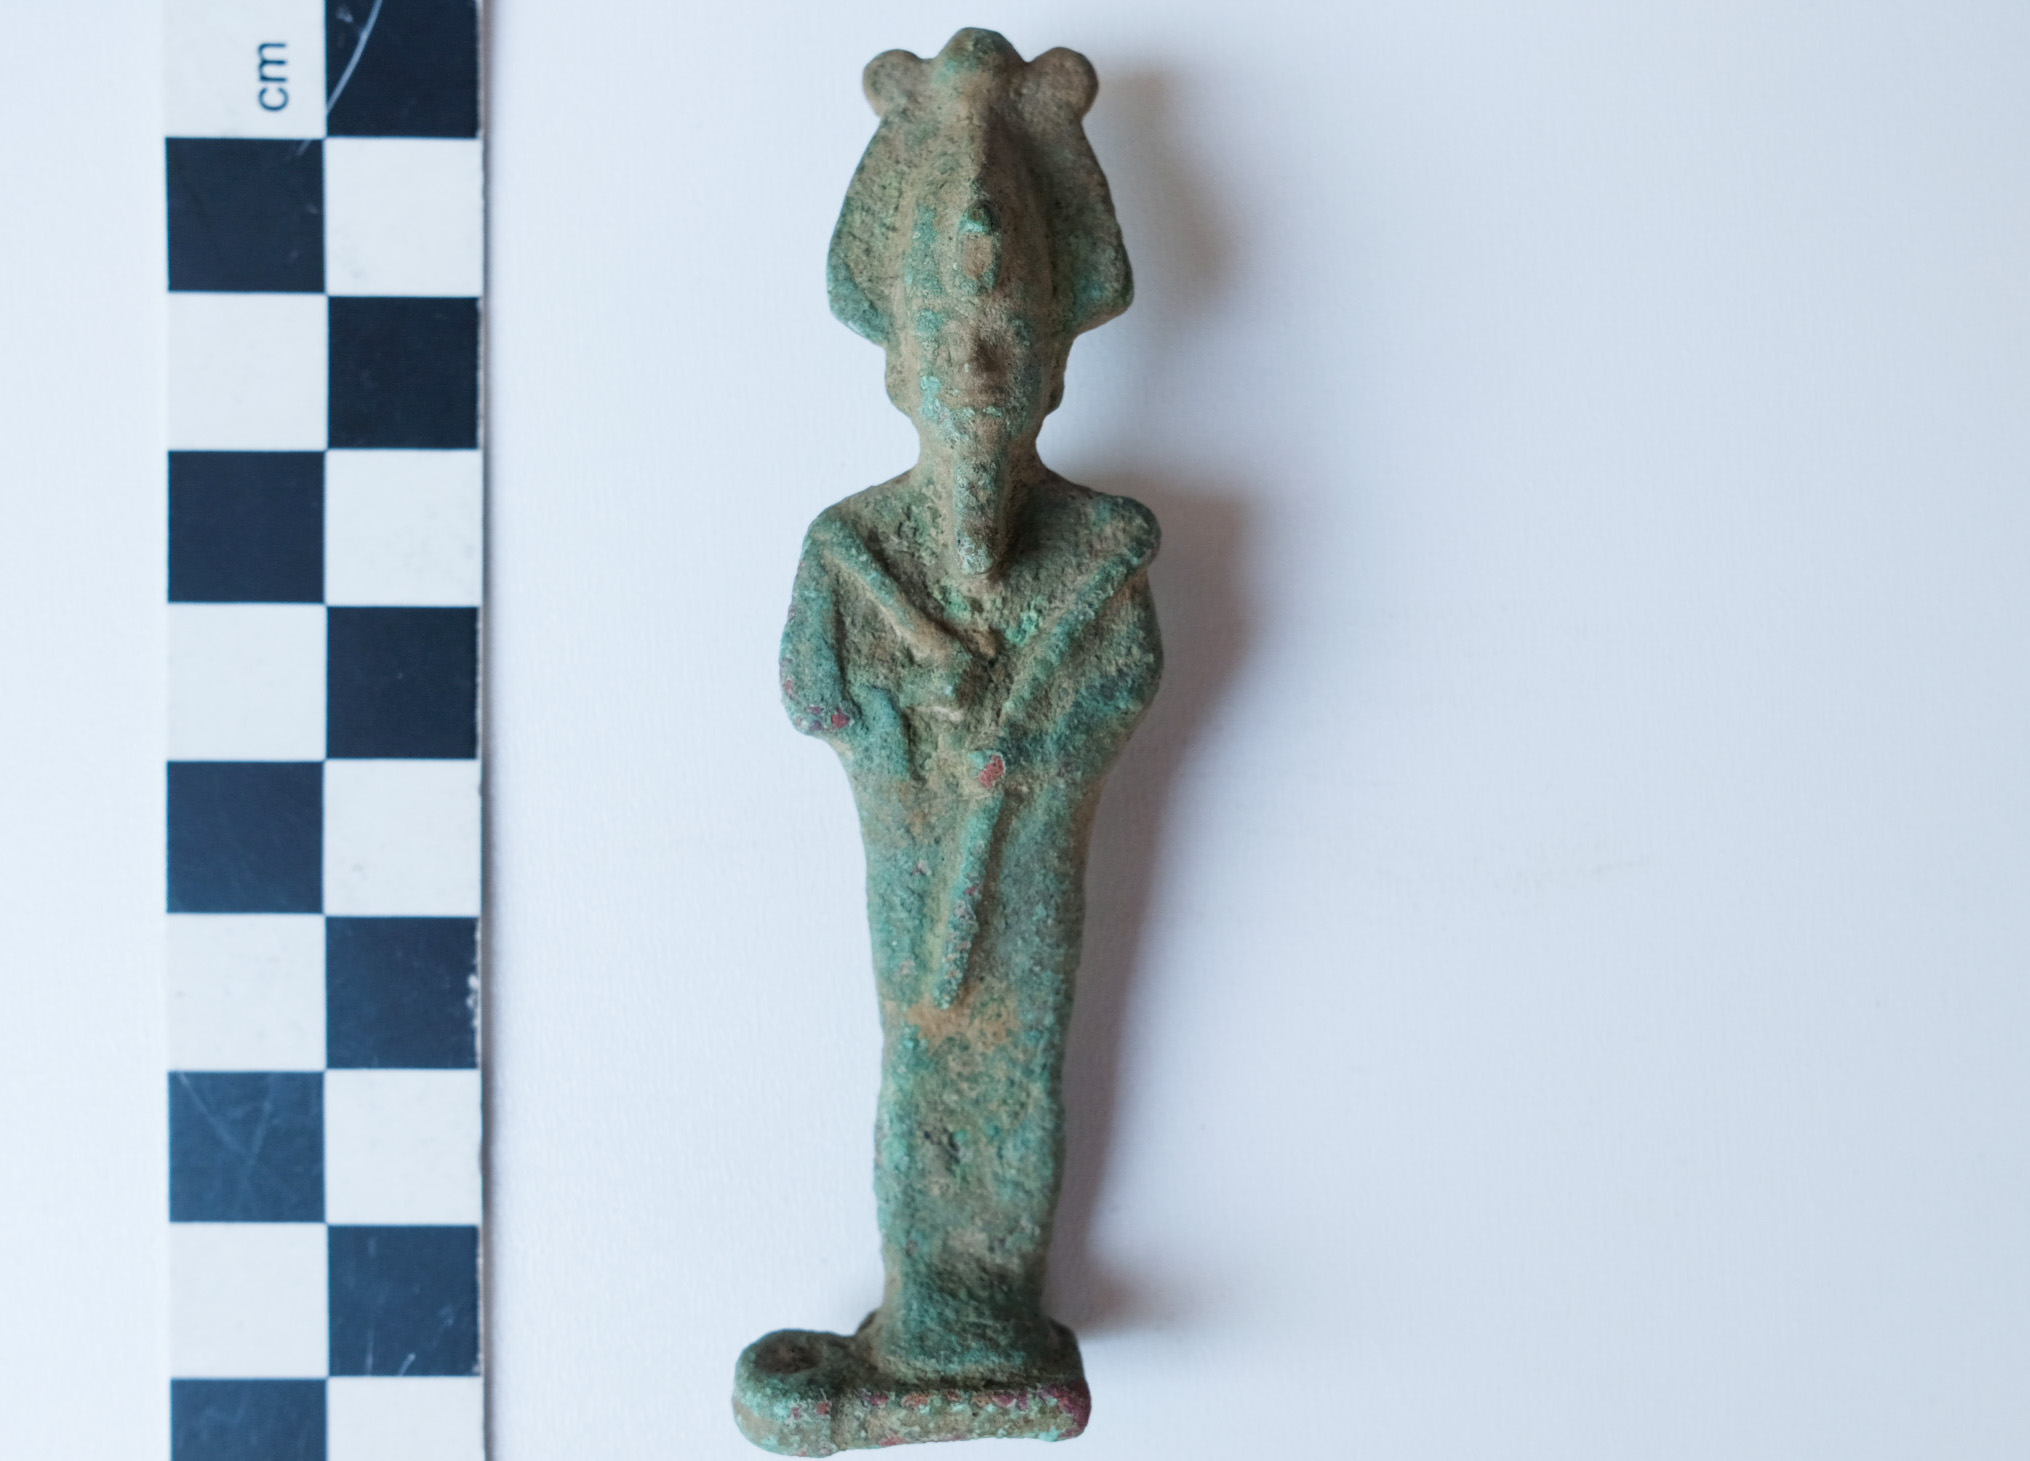 Egyptian figurines of the god Osiris in Poland